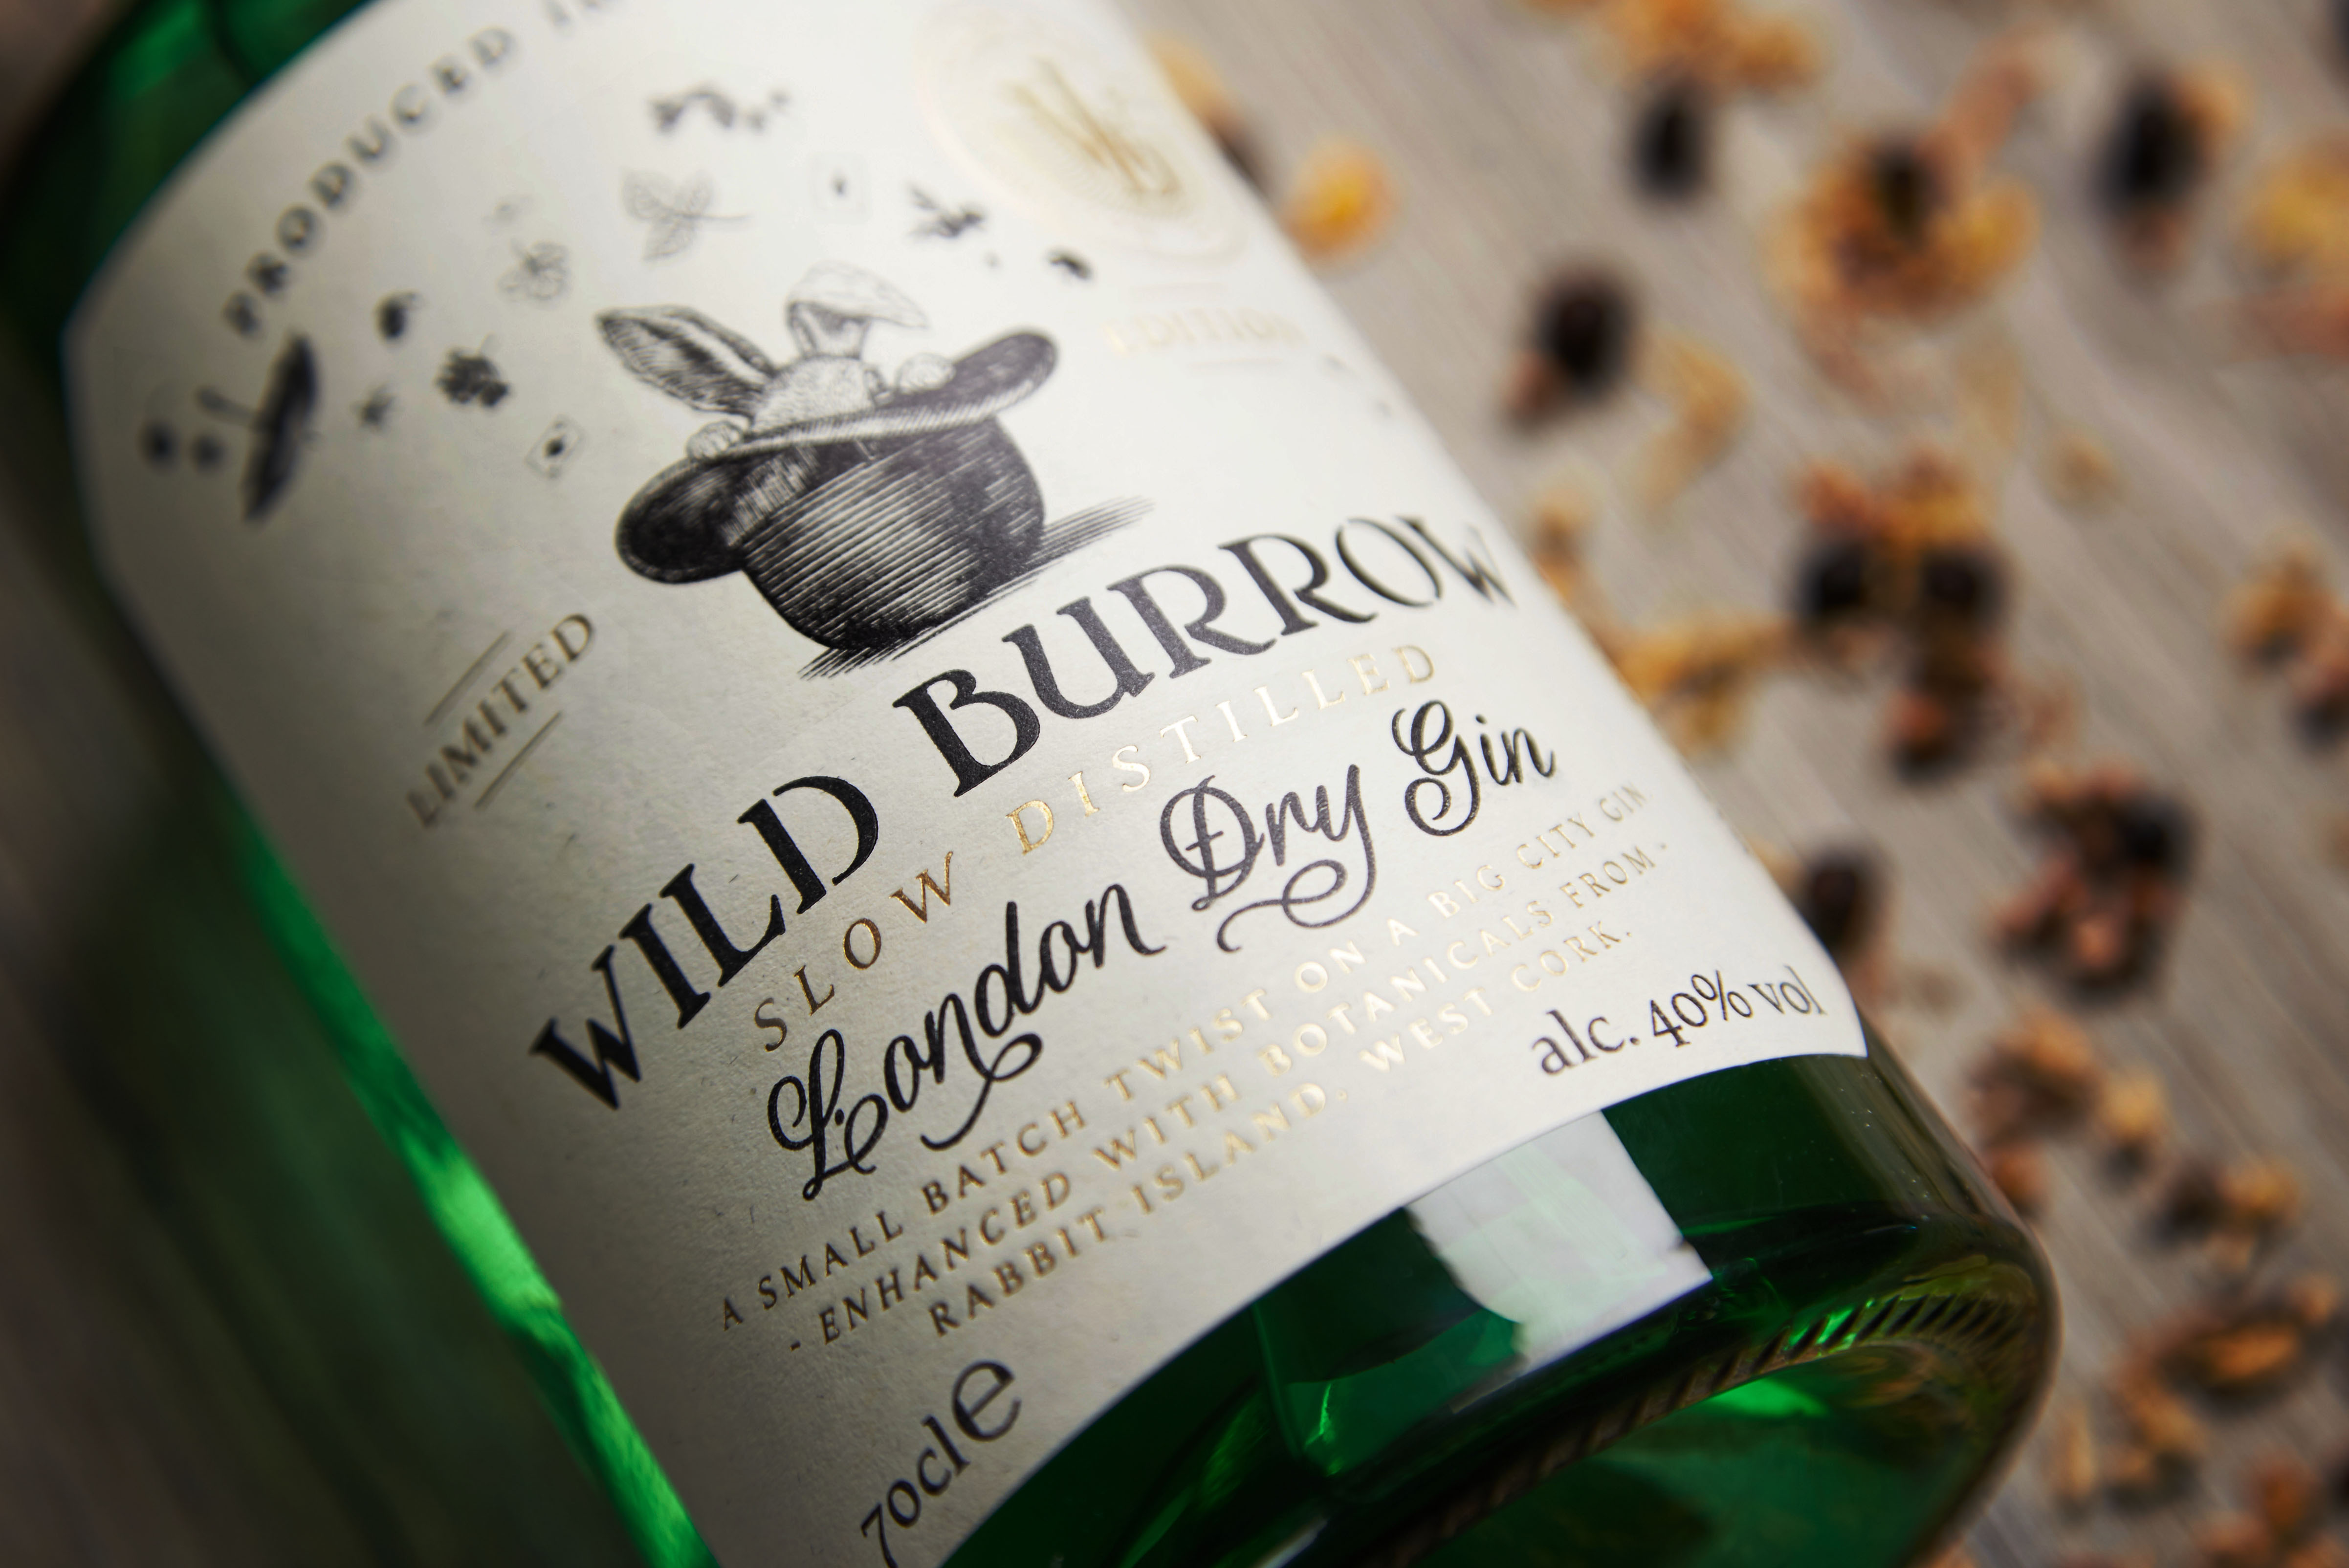 Cover image: Wild Burrow Gin Range